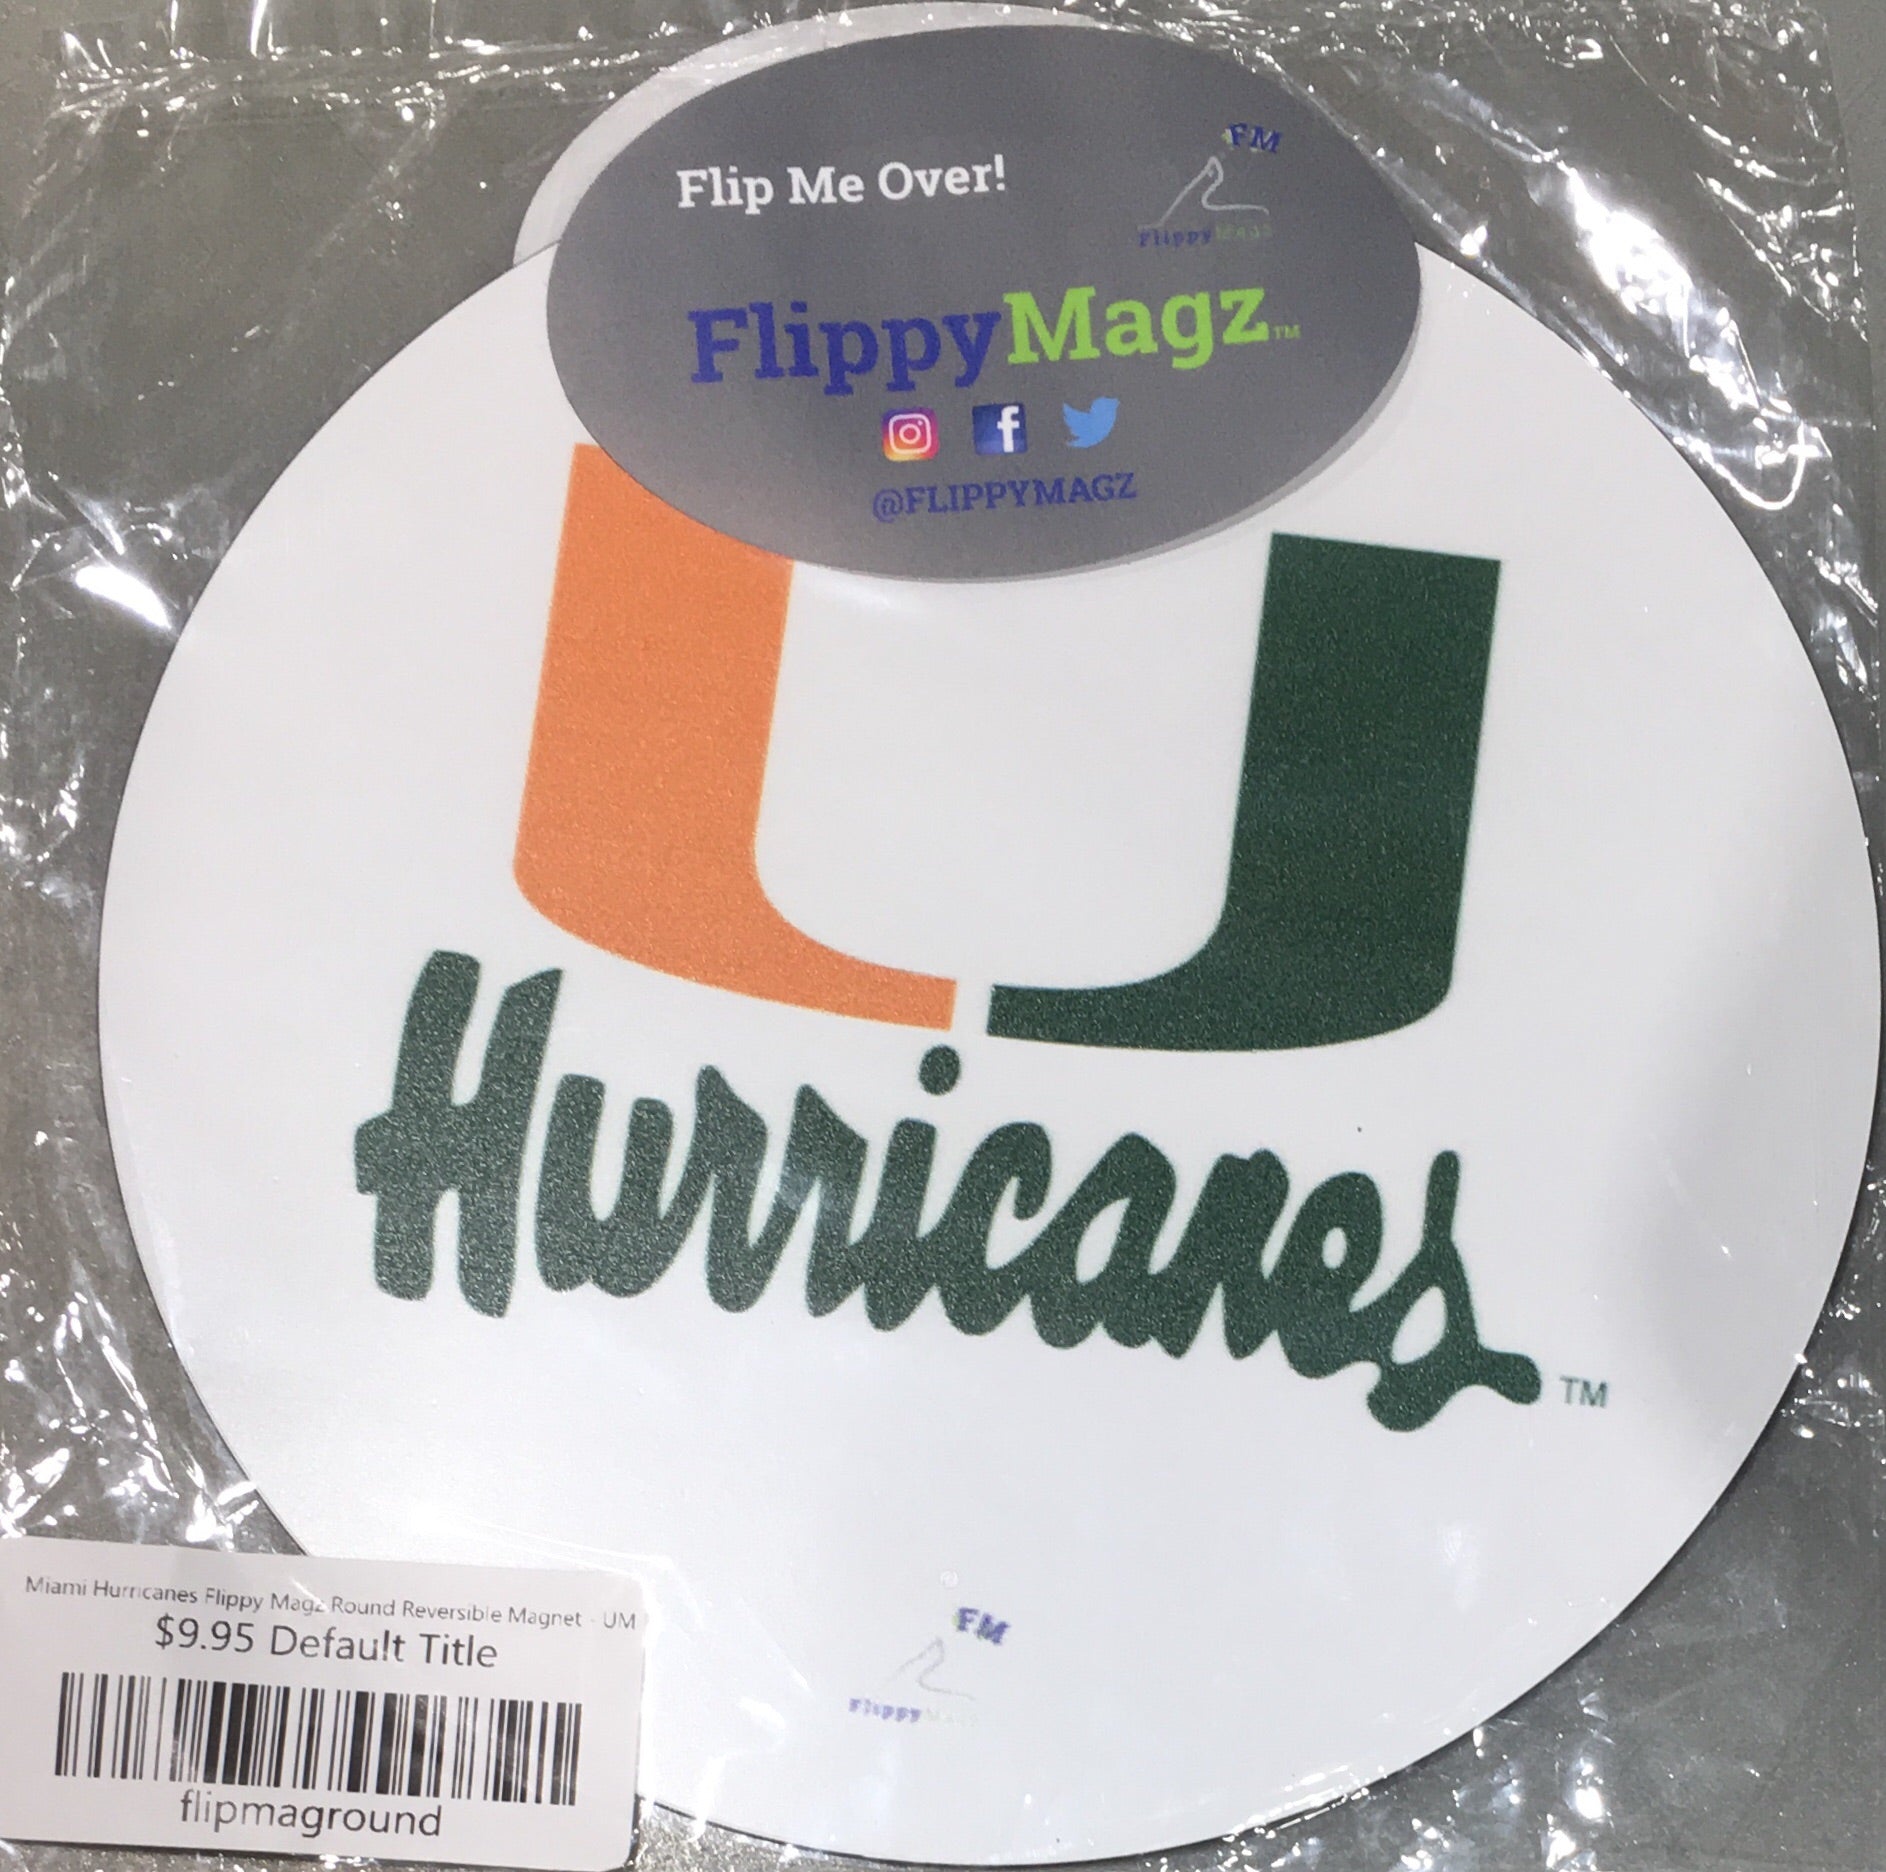 Miami Hurricanes Flippy Magz Round Reversible Magnet - UM